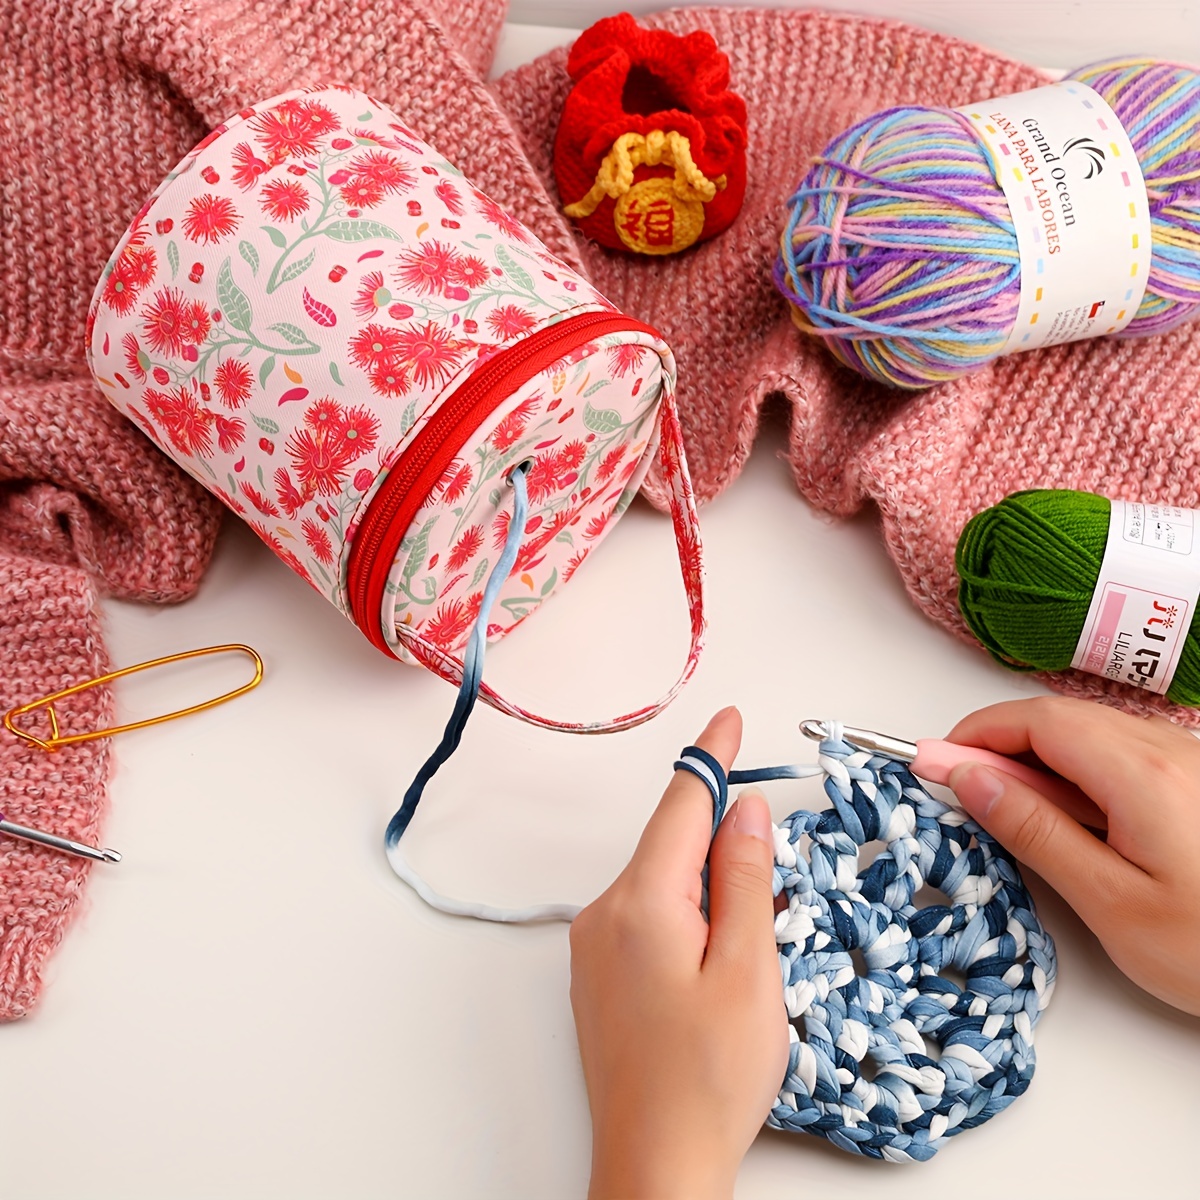 Crochet Hook Case, Portable Crochet Knitting Storage Bag Organizer